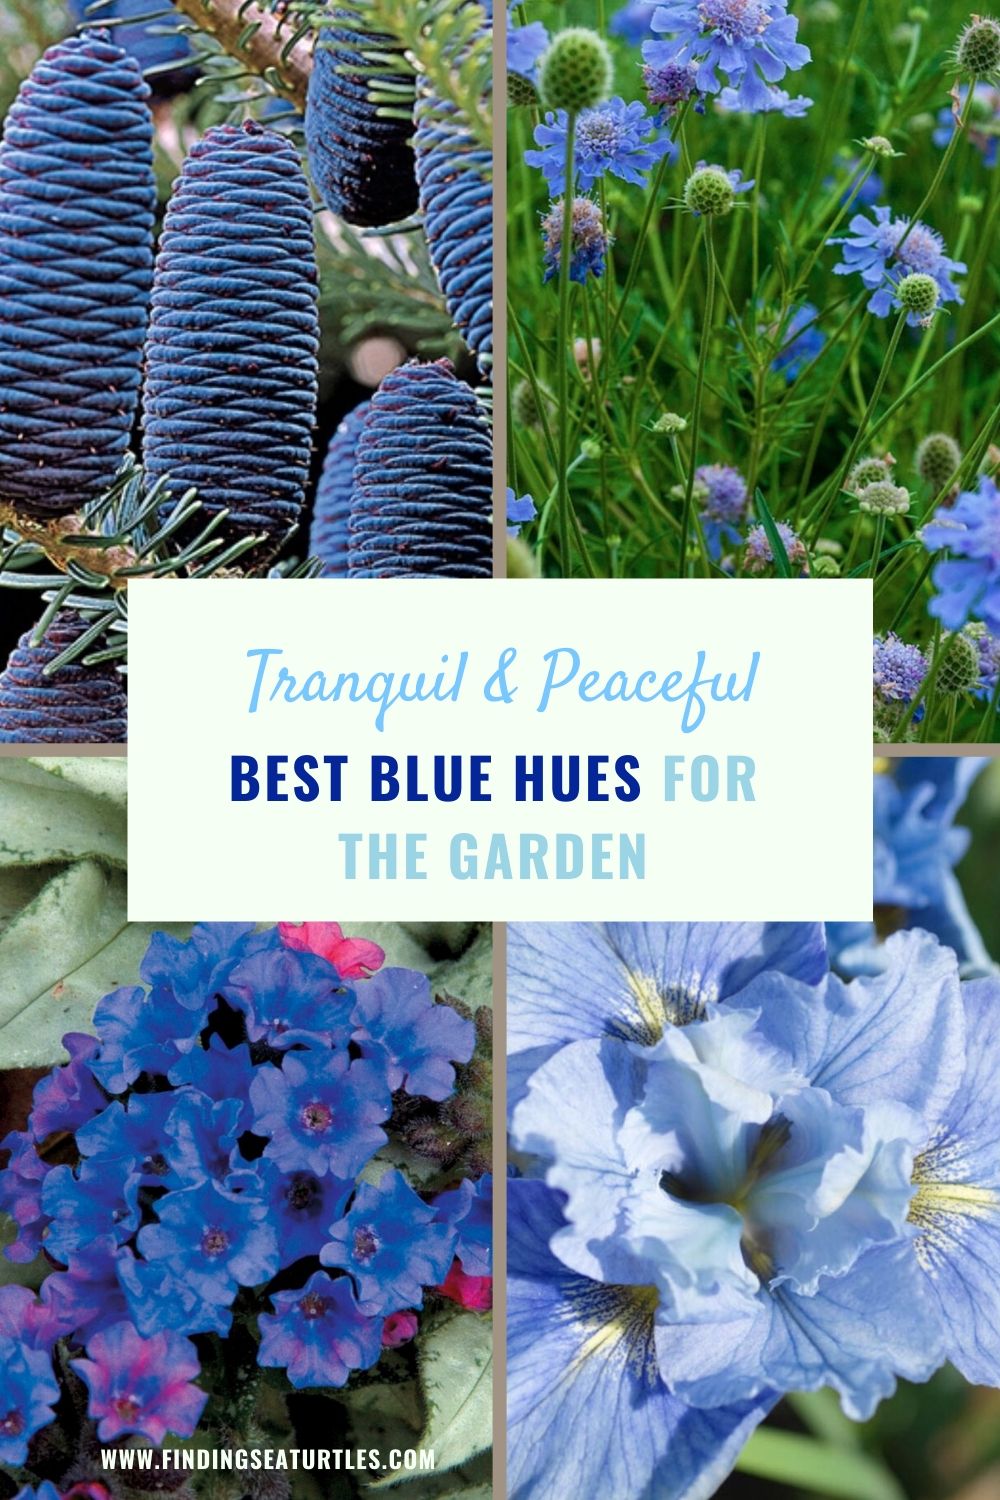 Tranquil Peaceful Best Blue Hues for the Garden #Garden #Plants #Gardening #PlantswithBlueFlowers #PlantswithBlueBlooms #BluePlants #DramaticFoliagePlants